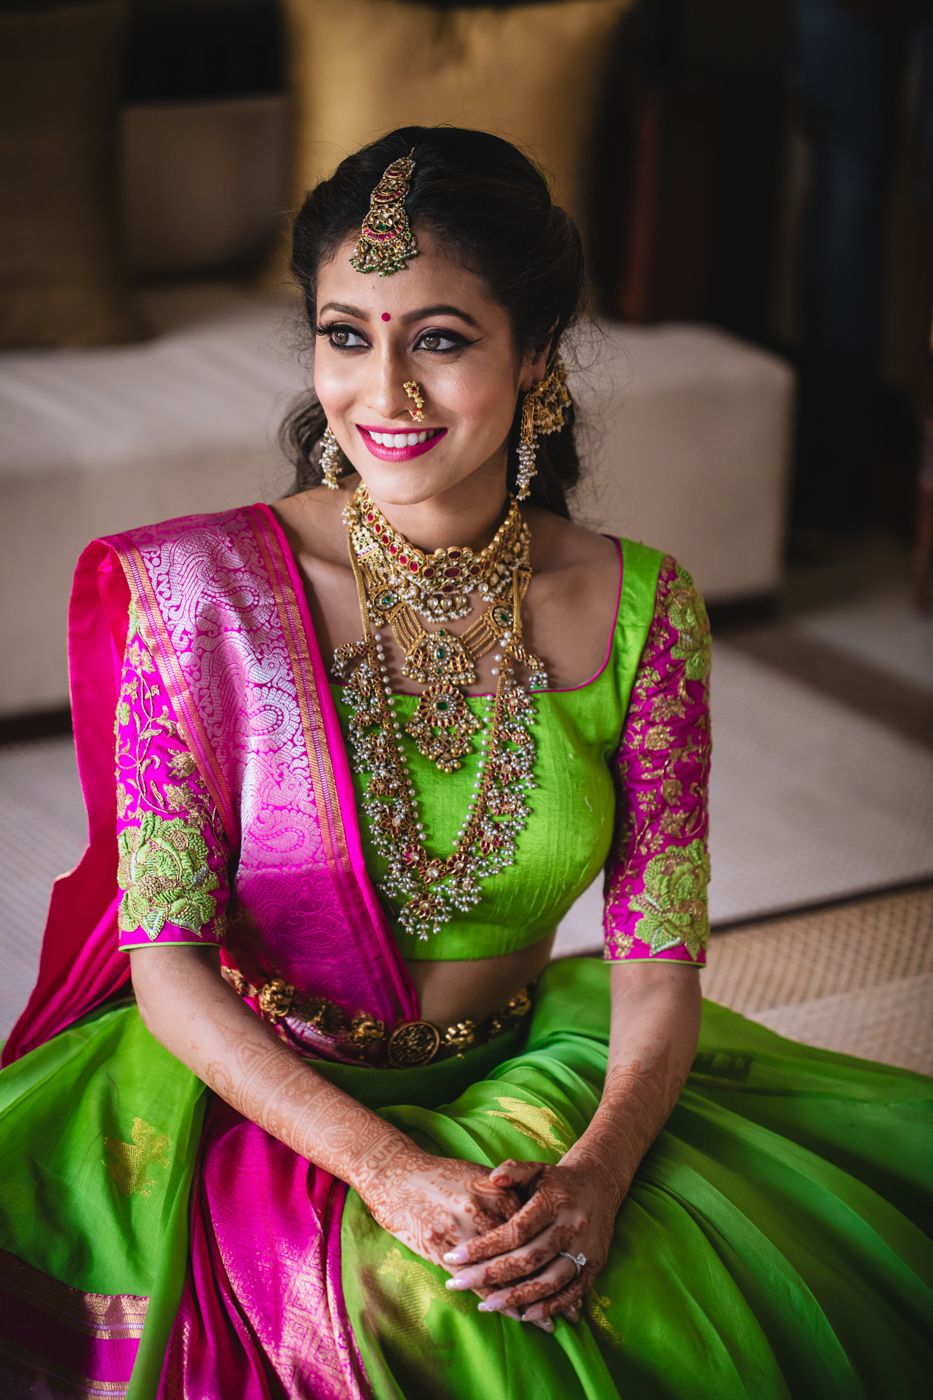 Photo of Mehendi bridal portrait in green and pink lehenga and layered jewellery